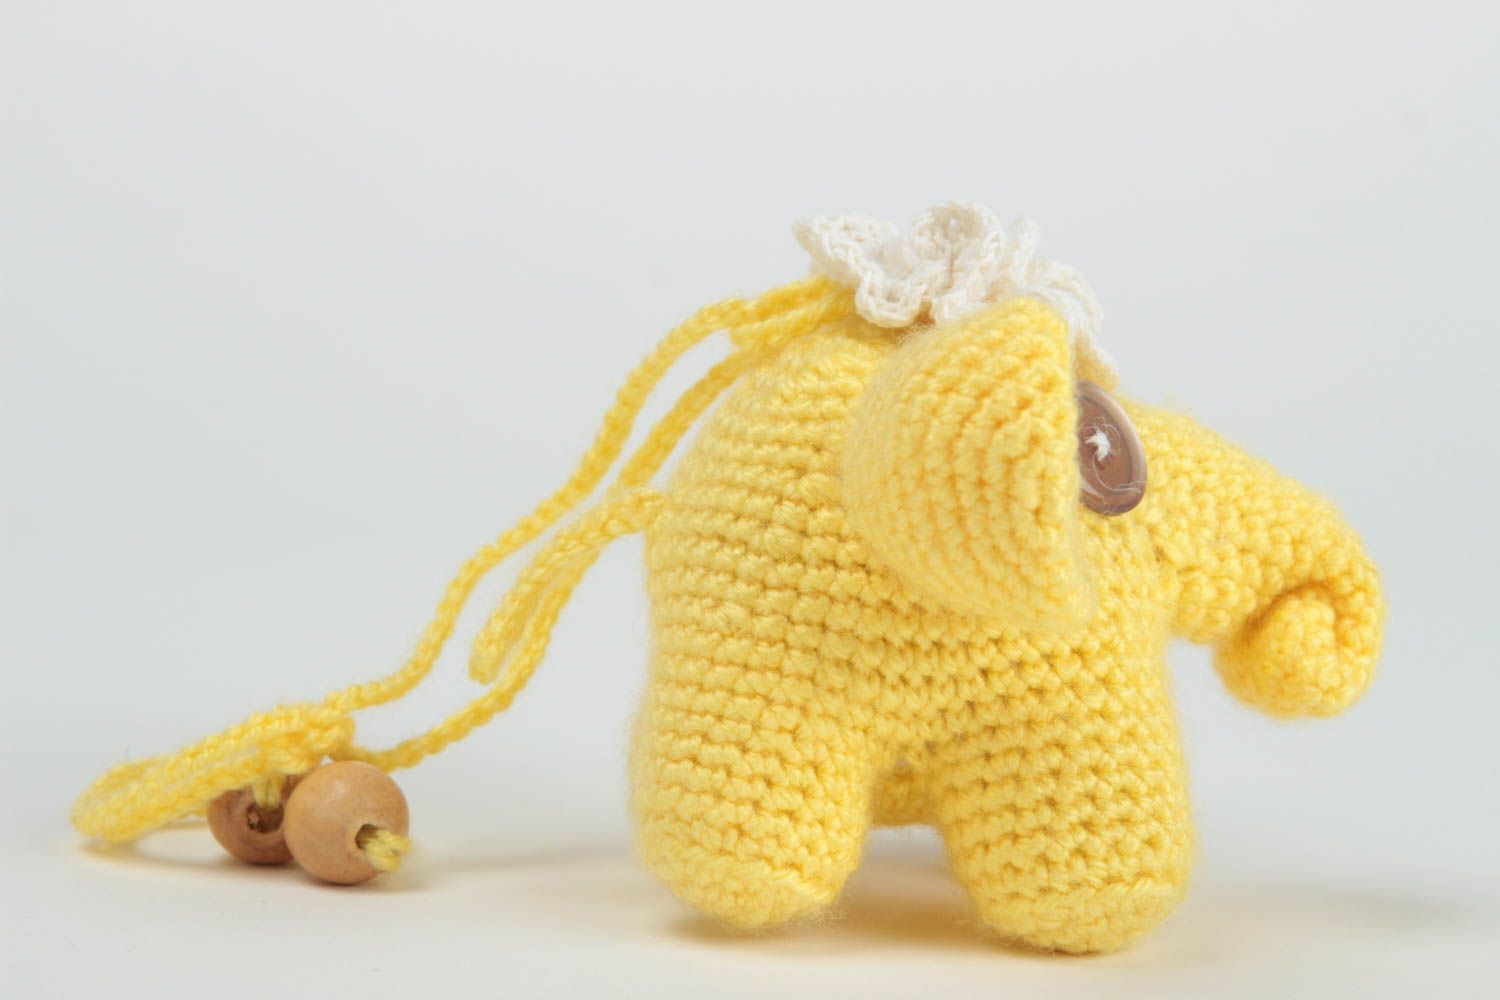 Beautiful handmade crochet toy childrens stuffed soft toy home design gift ideas photo 3